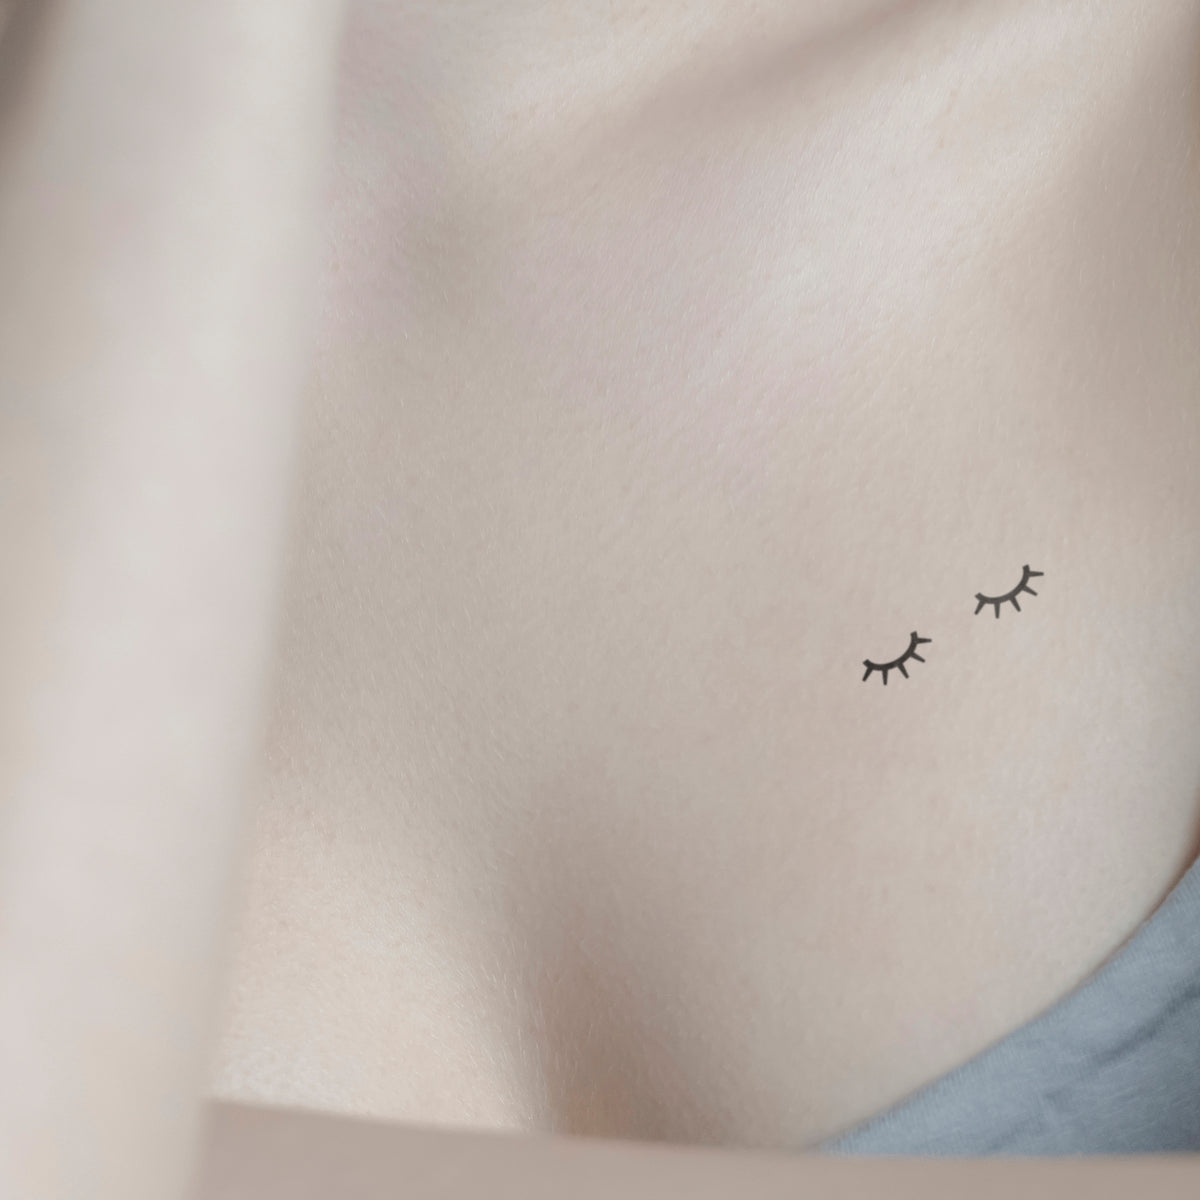 Minimalist star and flower tattoo on the collarbone.